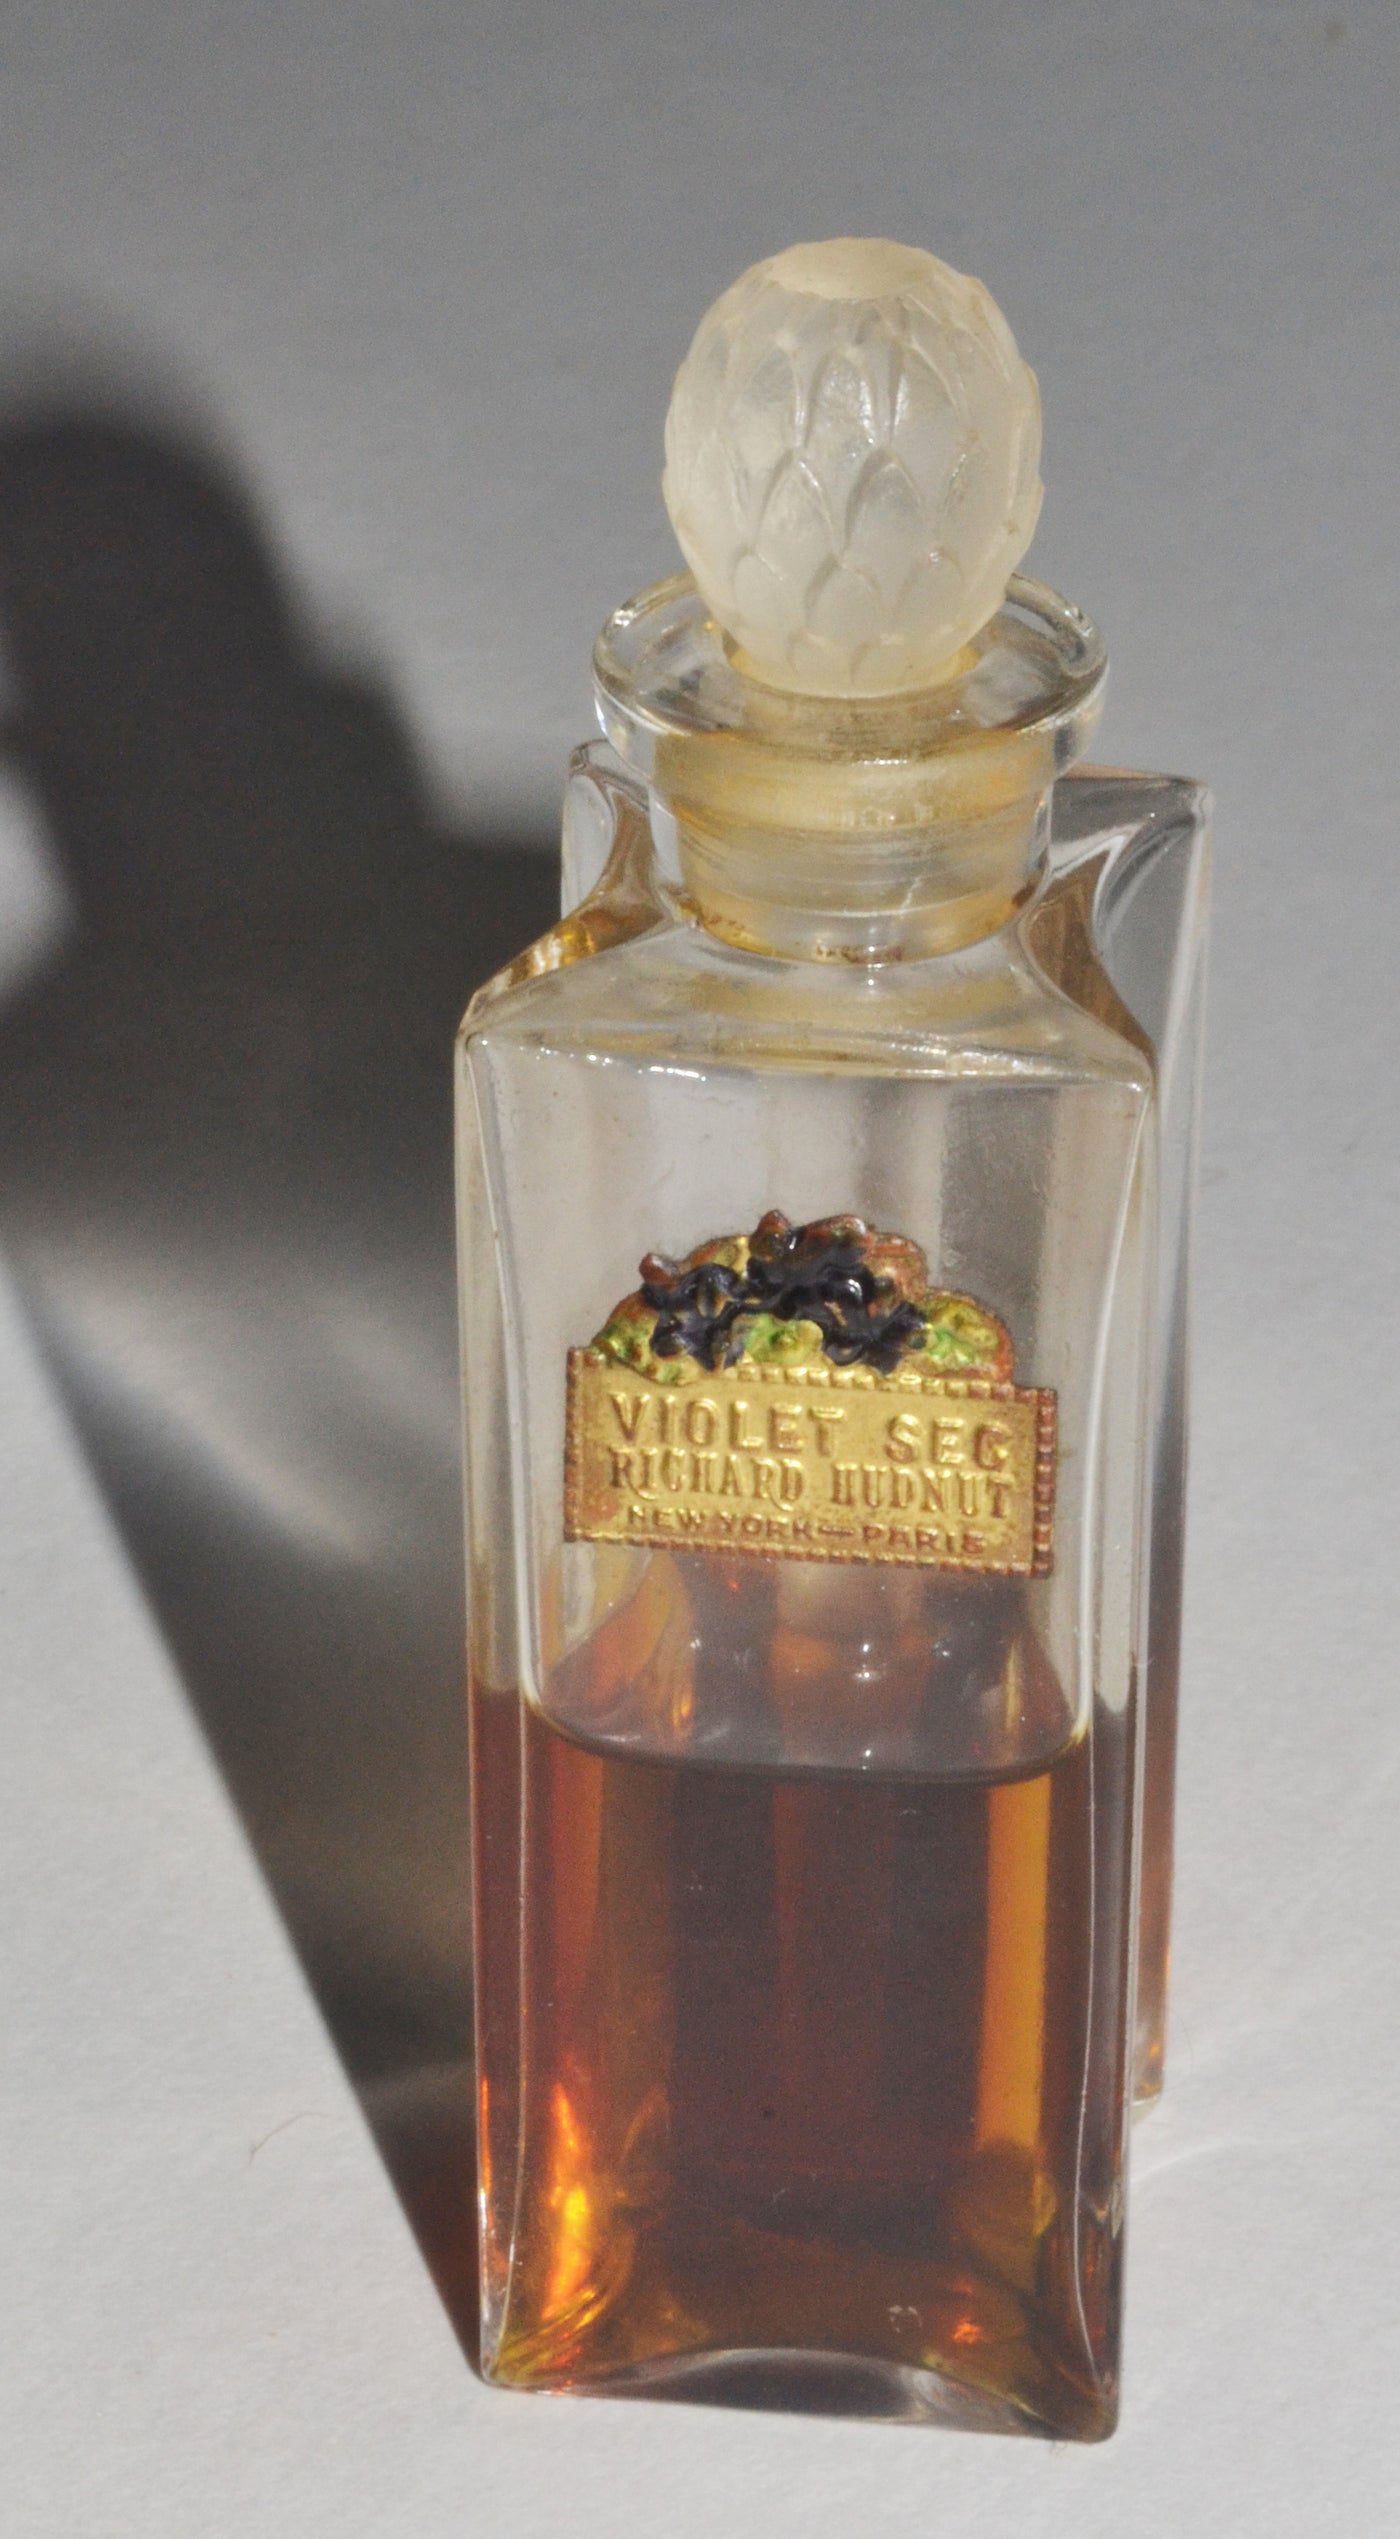 Vintage Violet Sec Perfume By Richard Hudnut